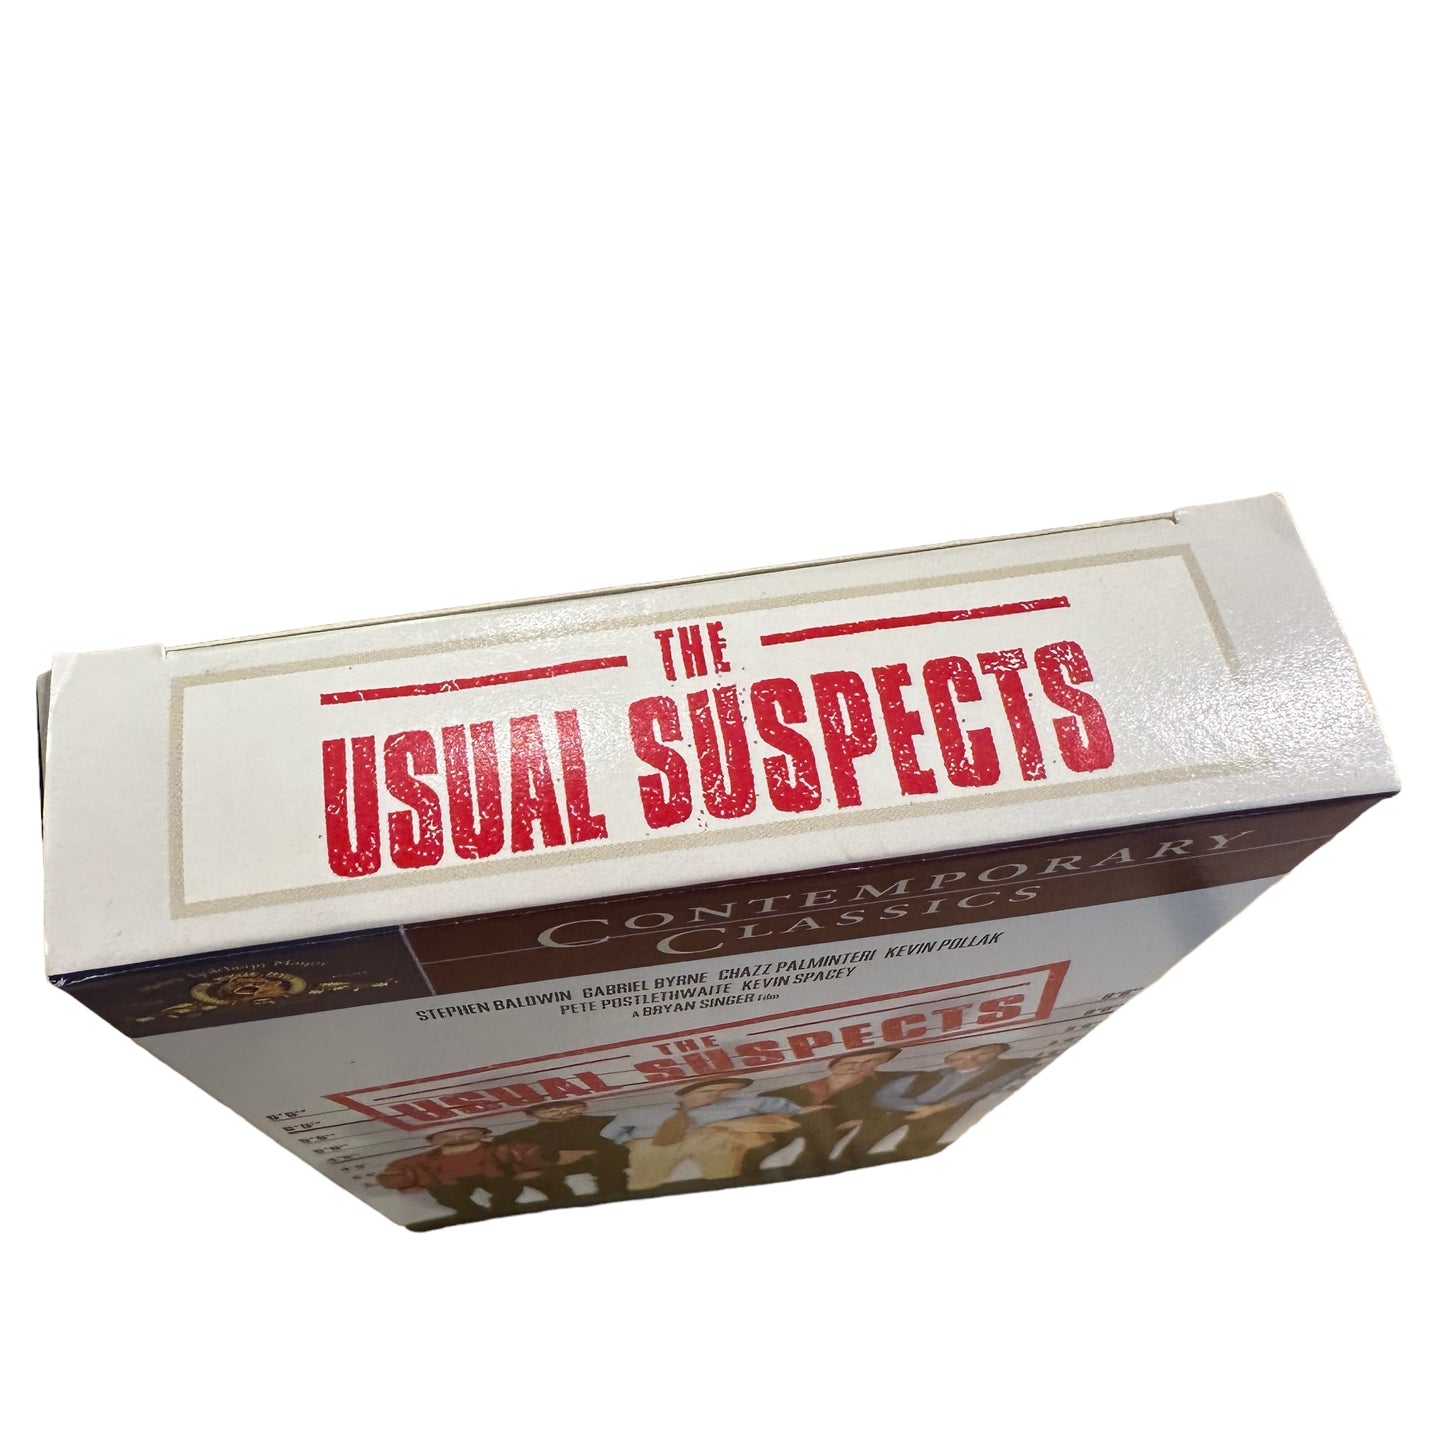 VHS ビデオテープ 輸入版 ユージュアル・サスペクツ The Usual Suspects 海外版 USA アメリカ ヴィンテージ ビデオ 紙ジャケ